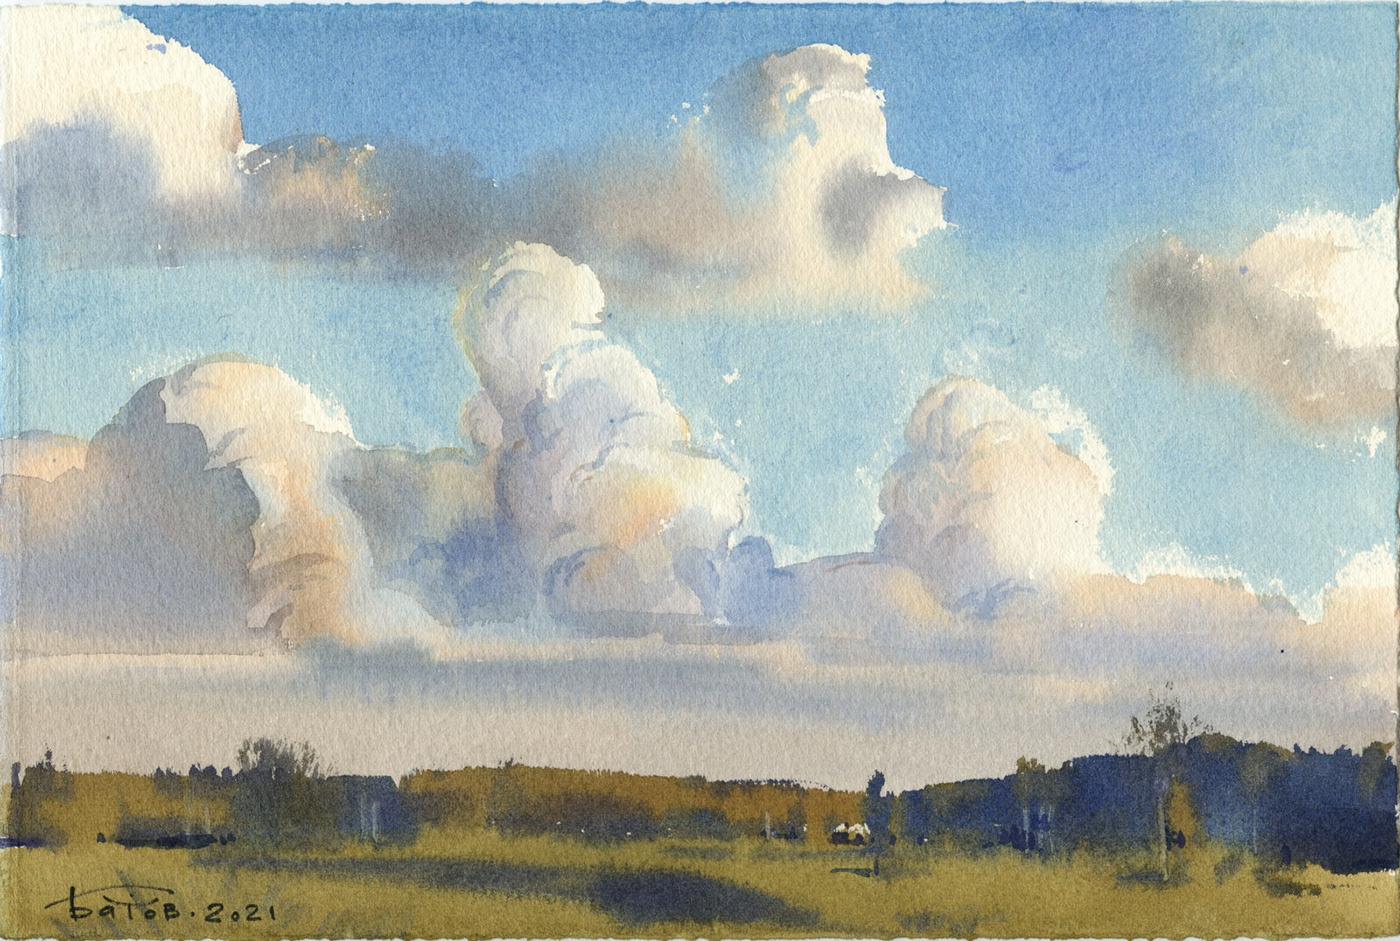 ArtBatDiversion clouds Landscape painting   SKY tutorial watercolor wip